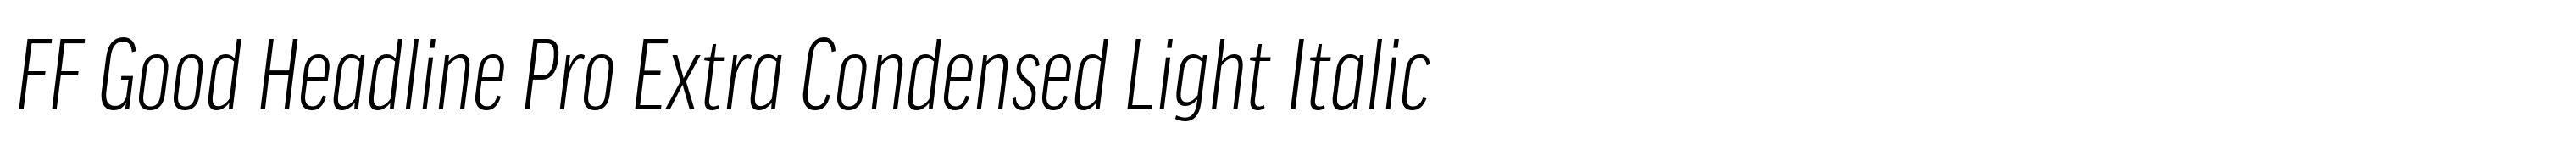 FF Good Headline Pro Extra Condensed Light Italic